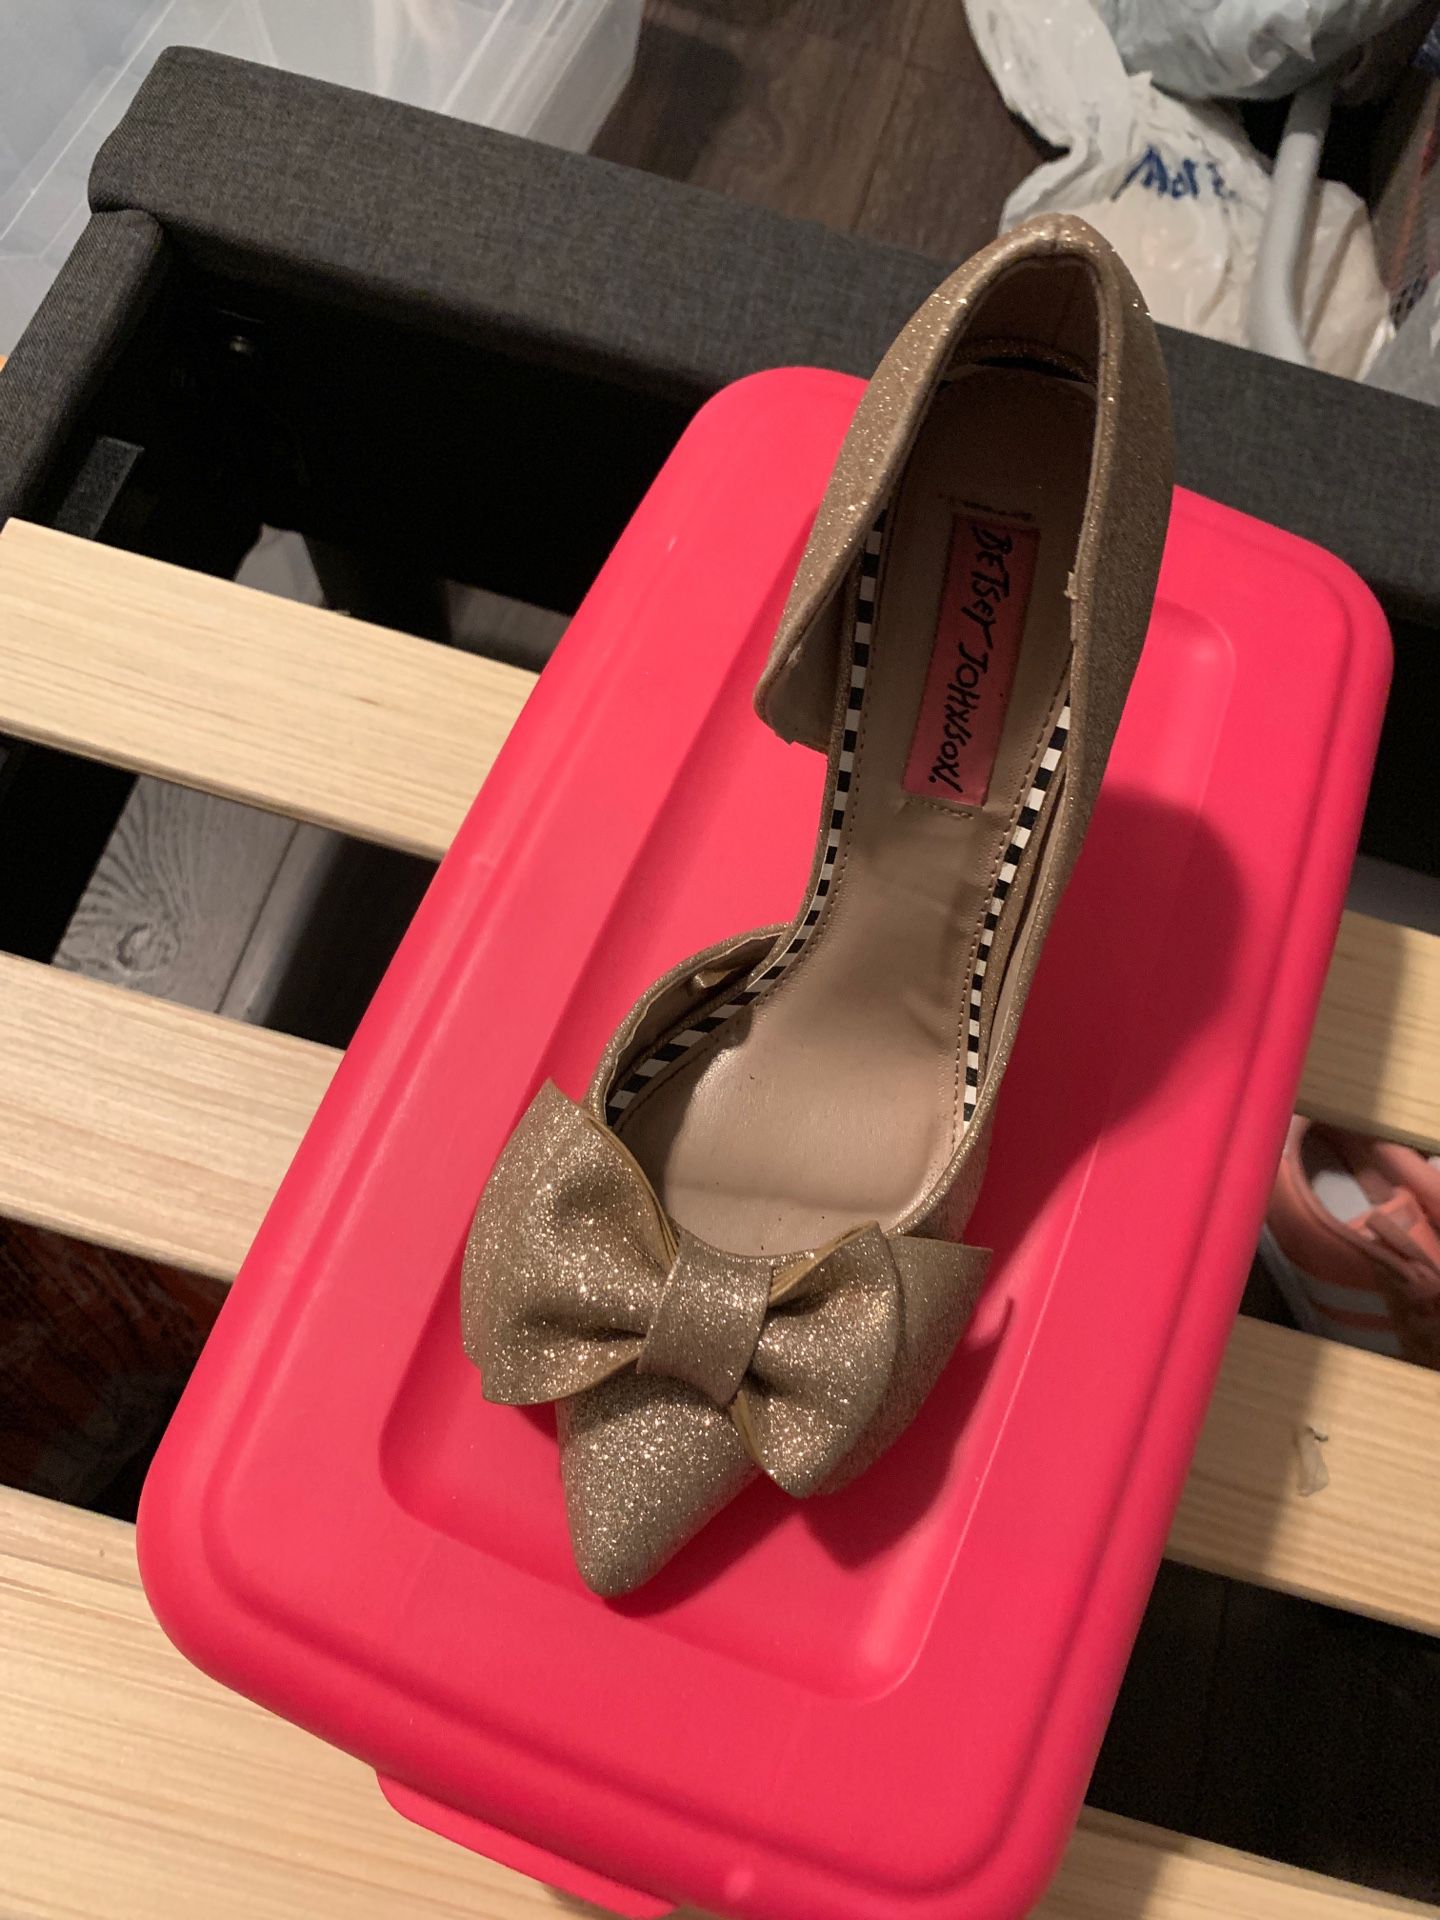 Betsey Johnson heels size 5.5